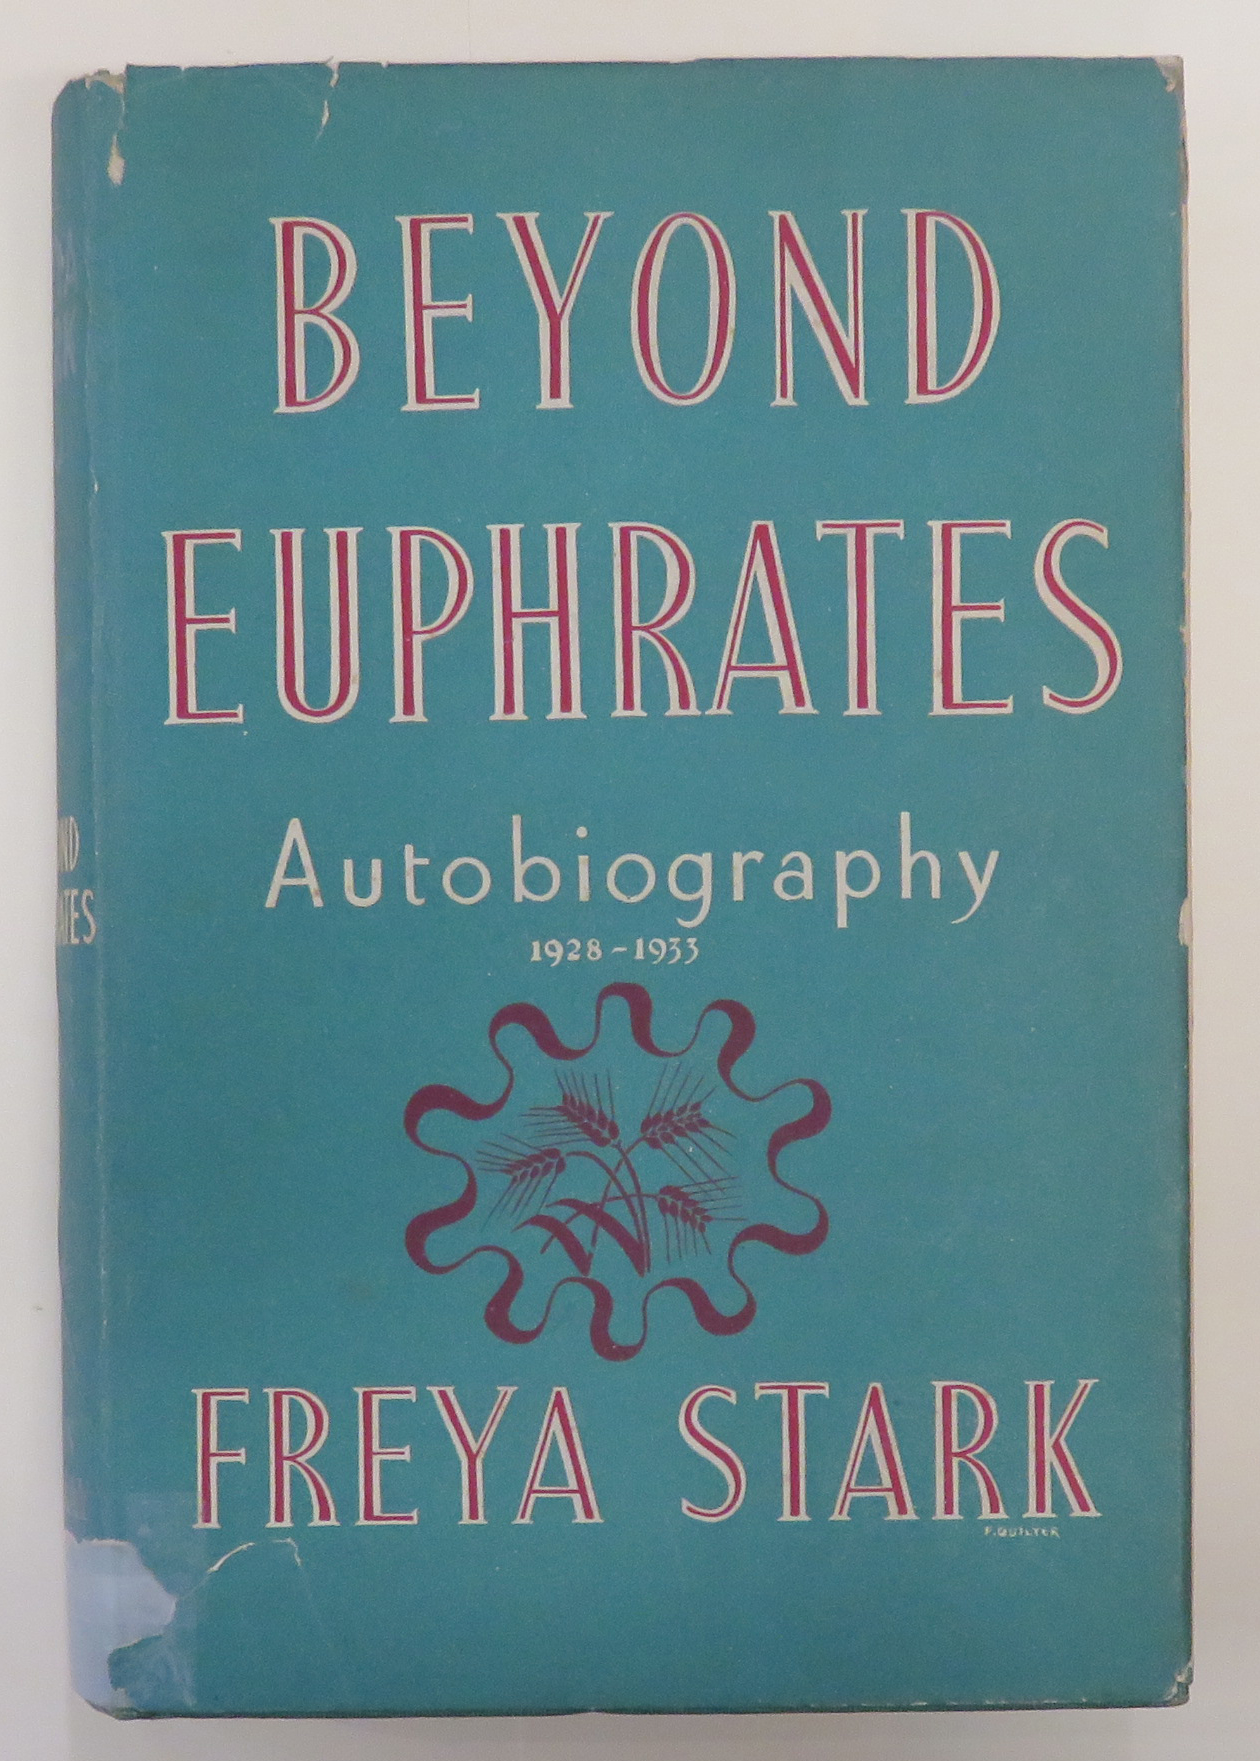 Beyond Euphrates: Autobiography 1928-1933